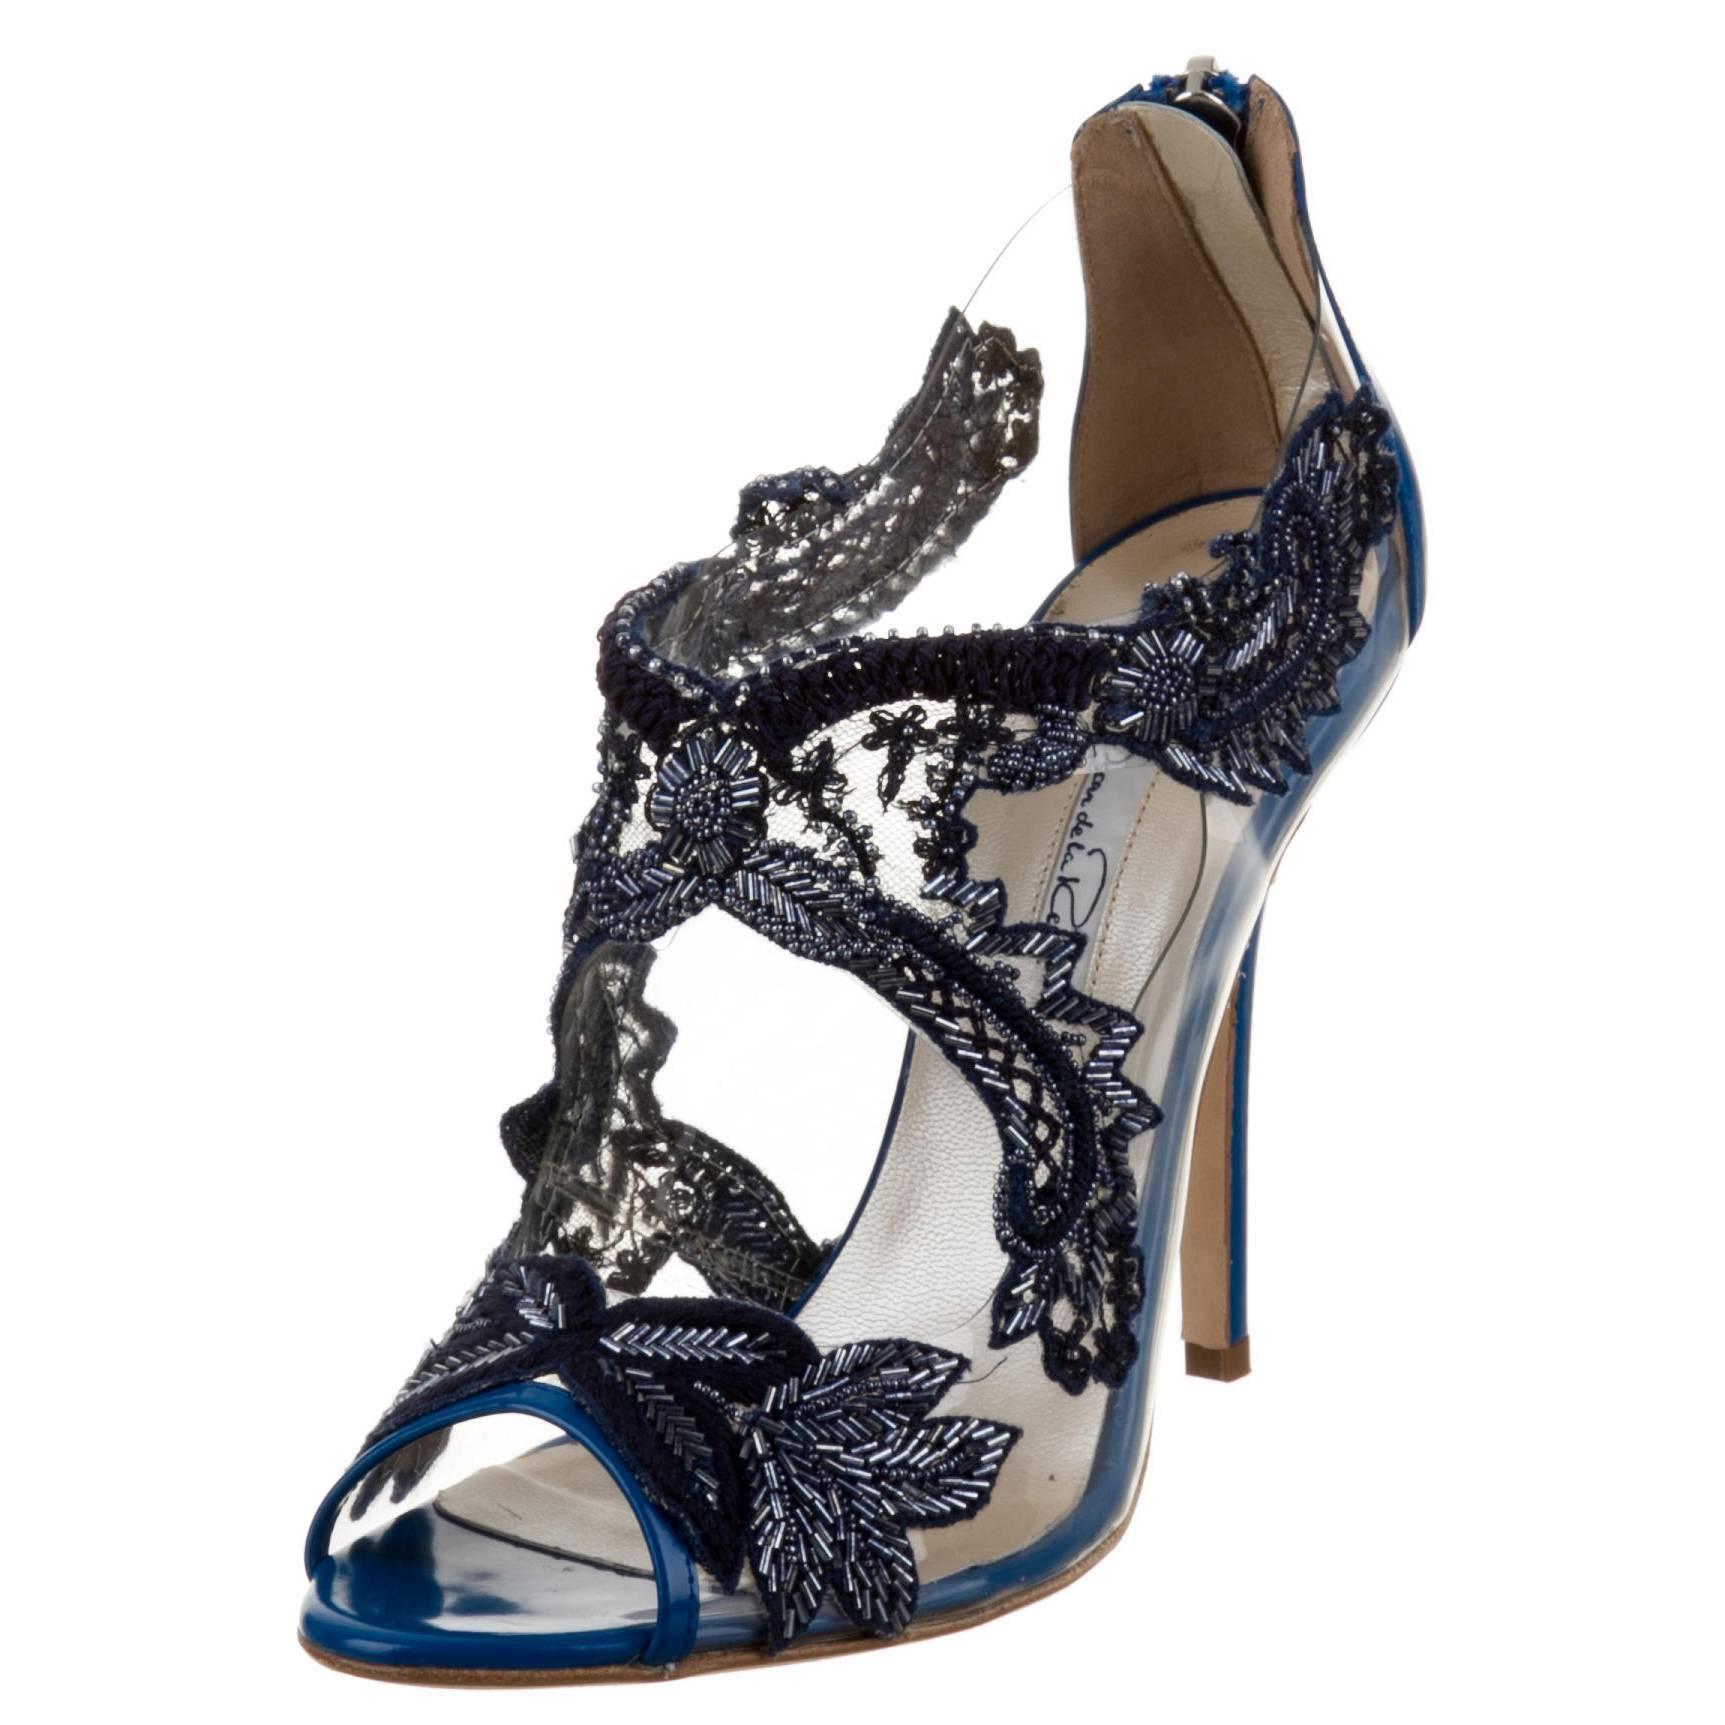 Oscar de la Renta NEW Blue Black Floral Beaded Flower Sandals High Heels in Box